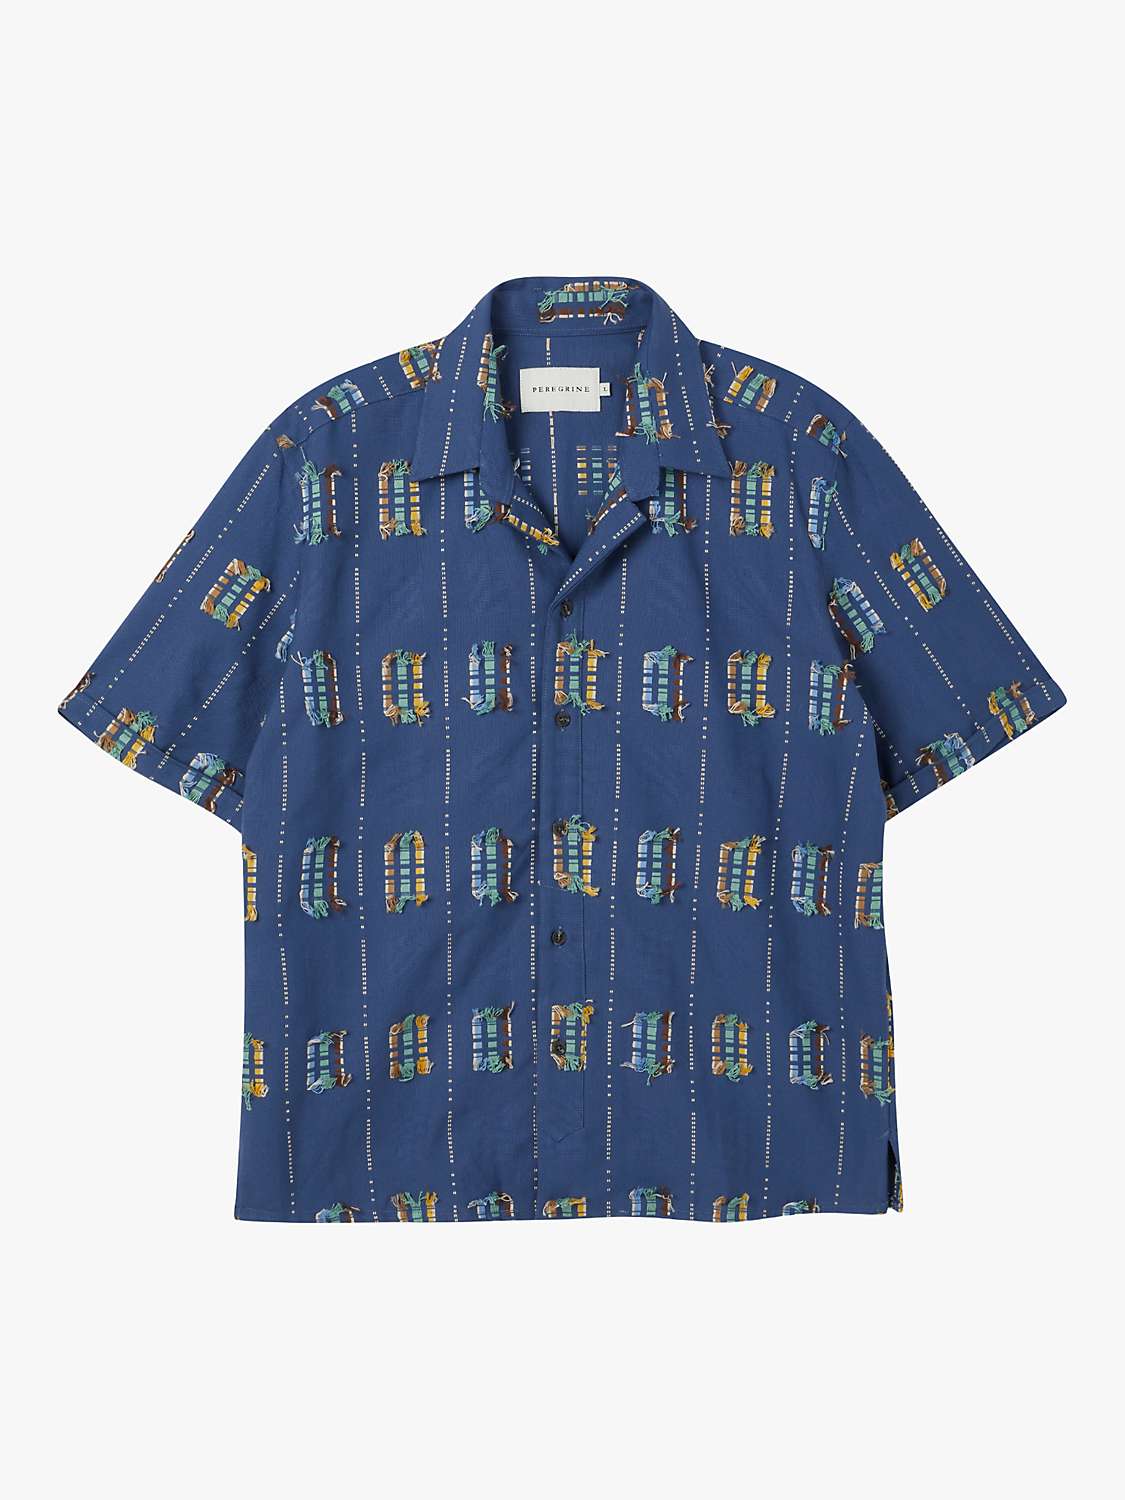 Buy Peregrine Creek Short Sleeve Shirt, Blue/Multi Online at johnlewis.com